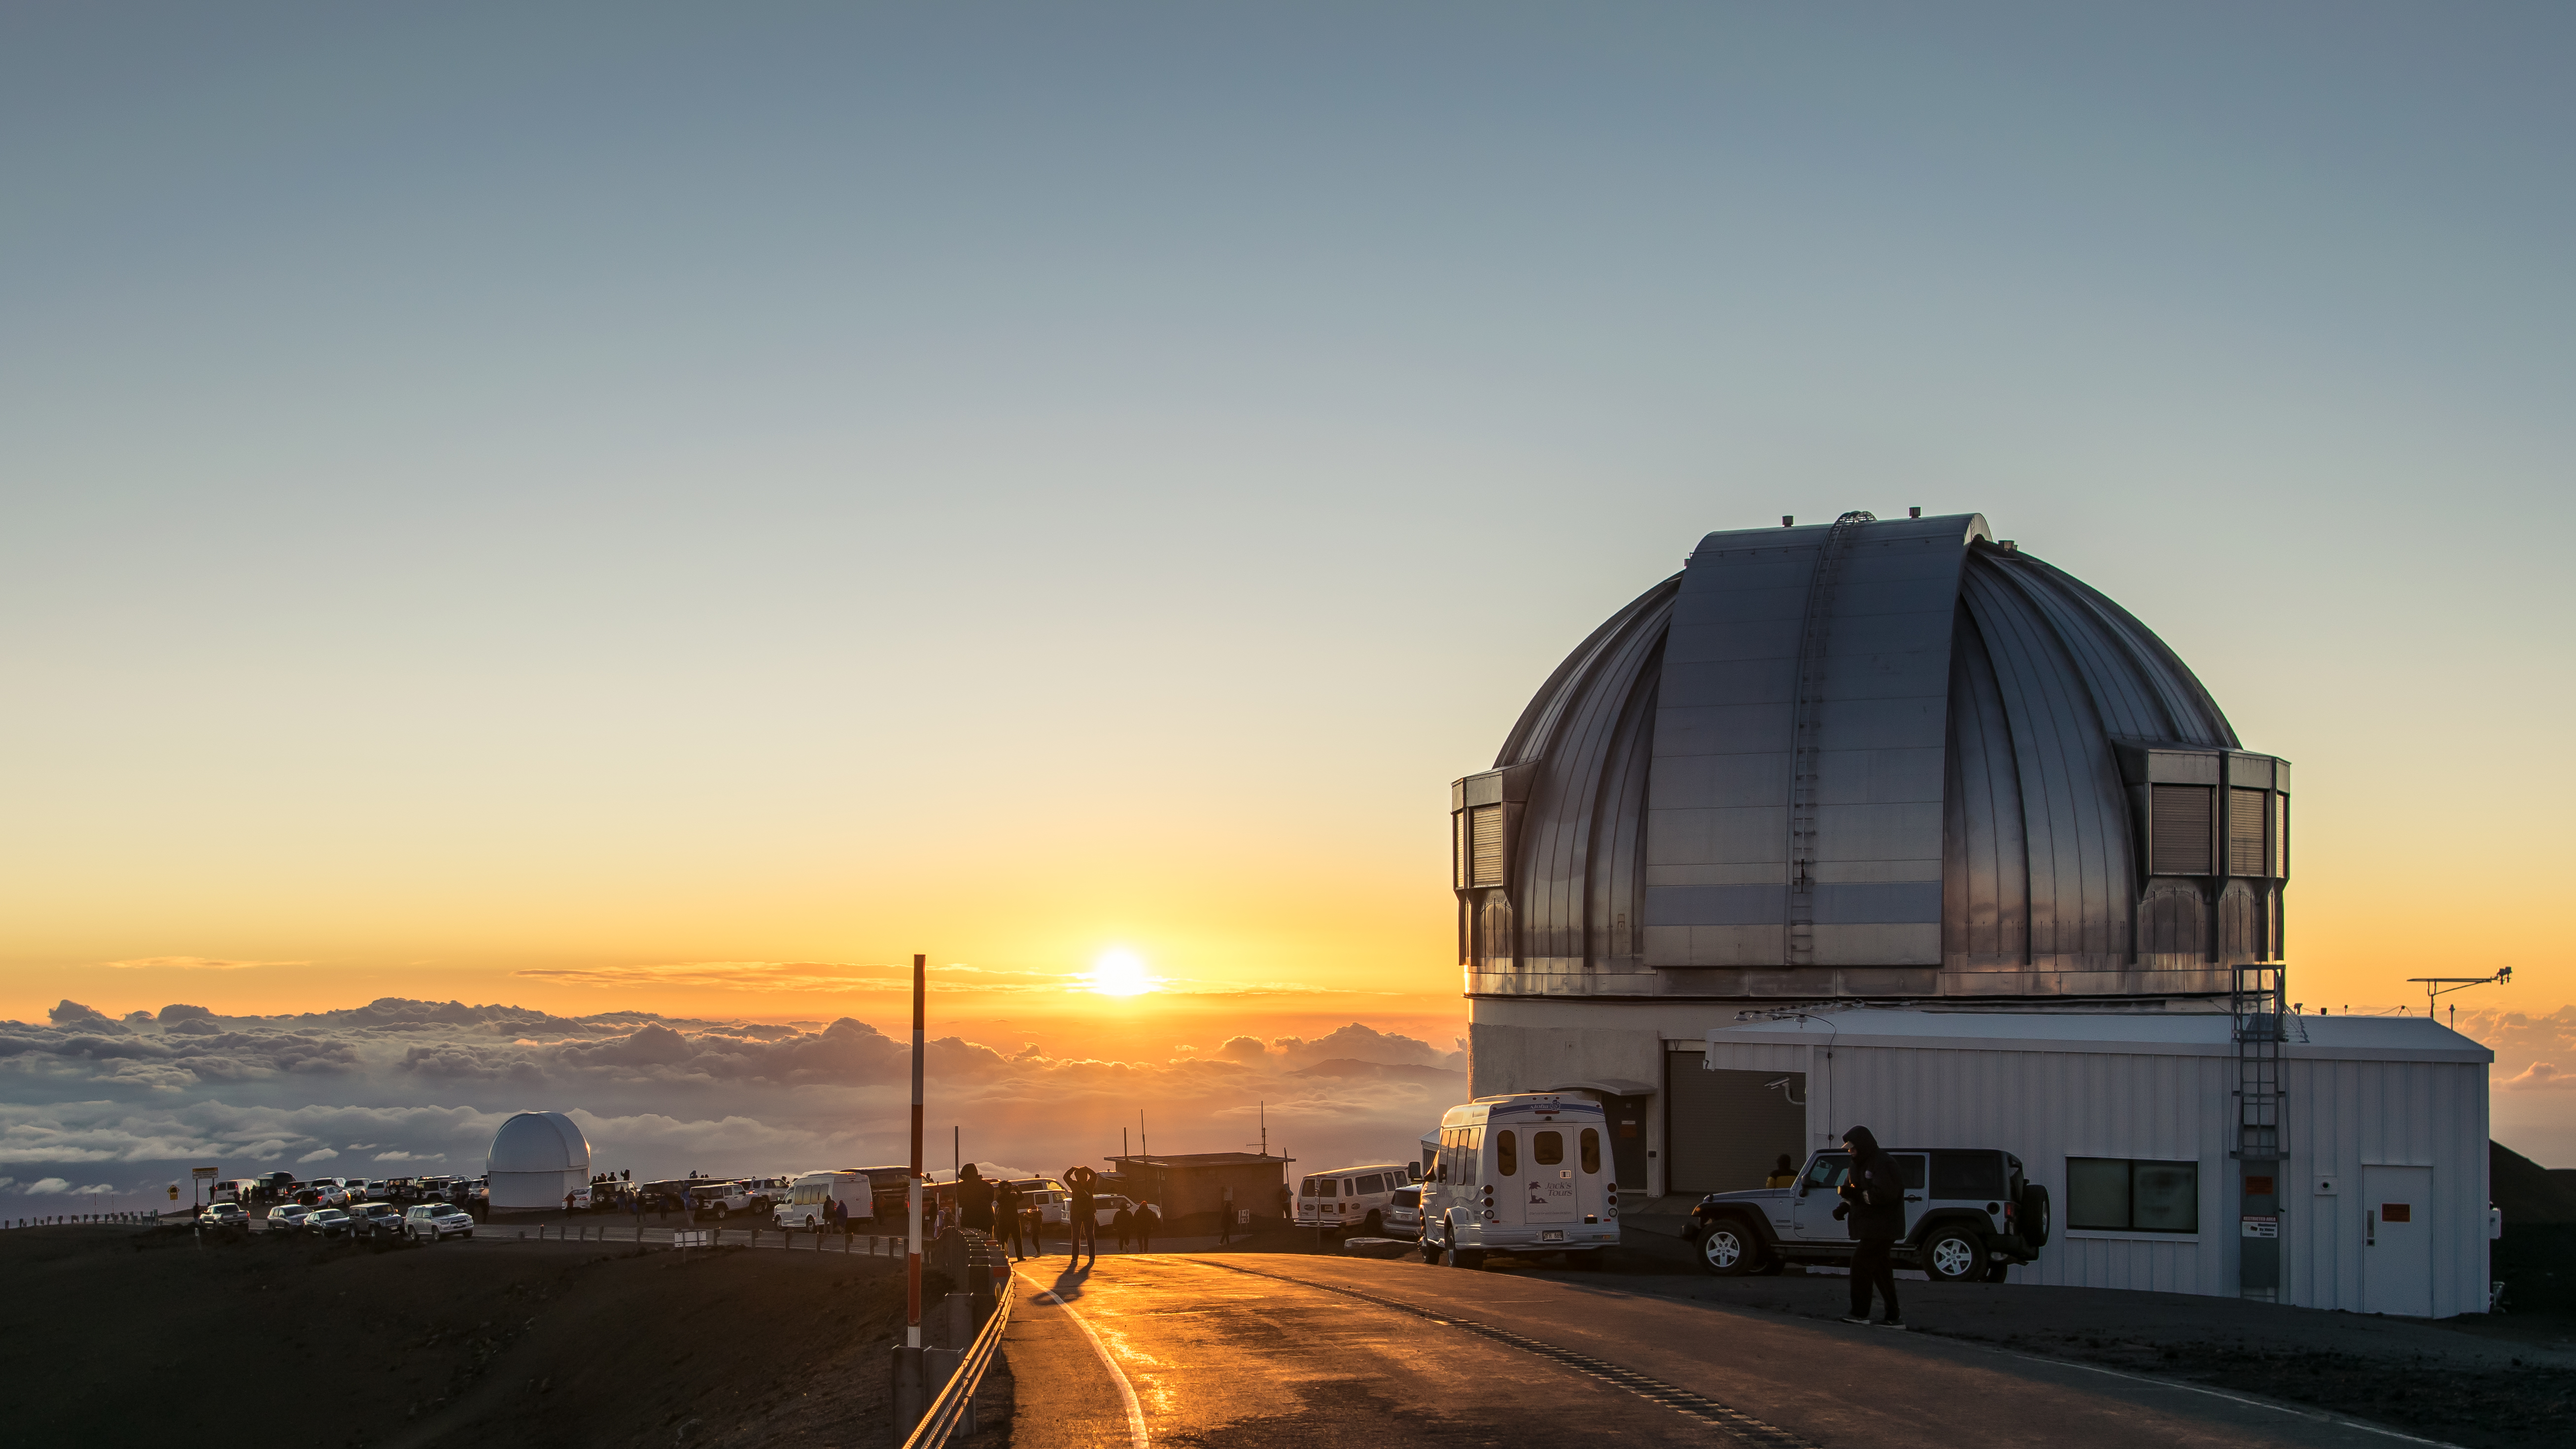 Telescope and sunset